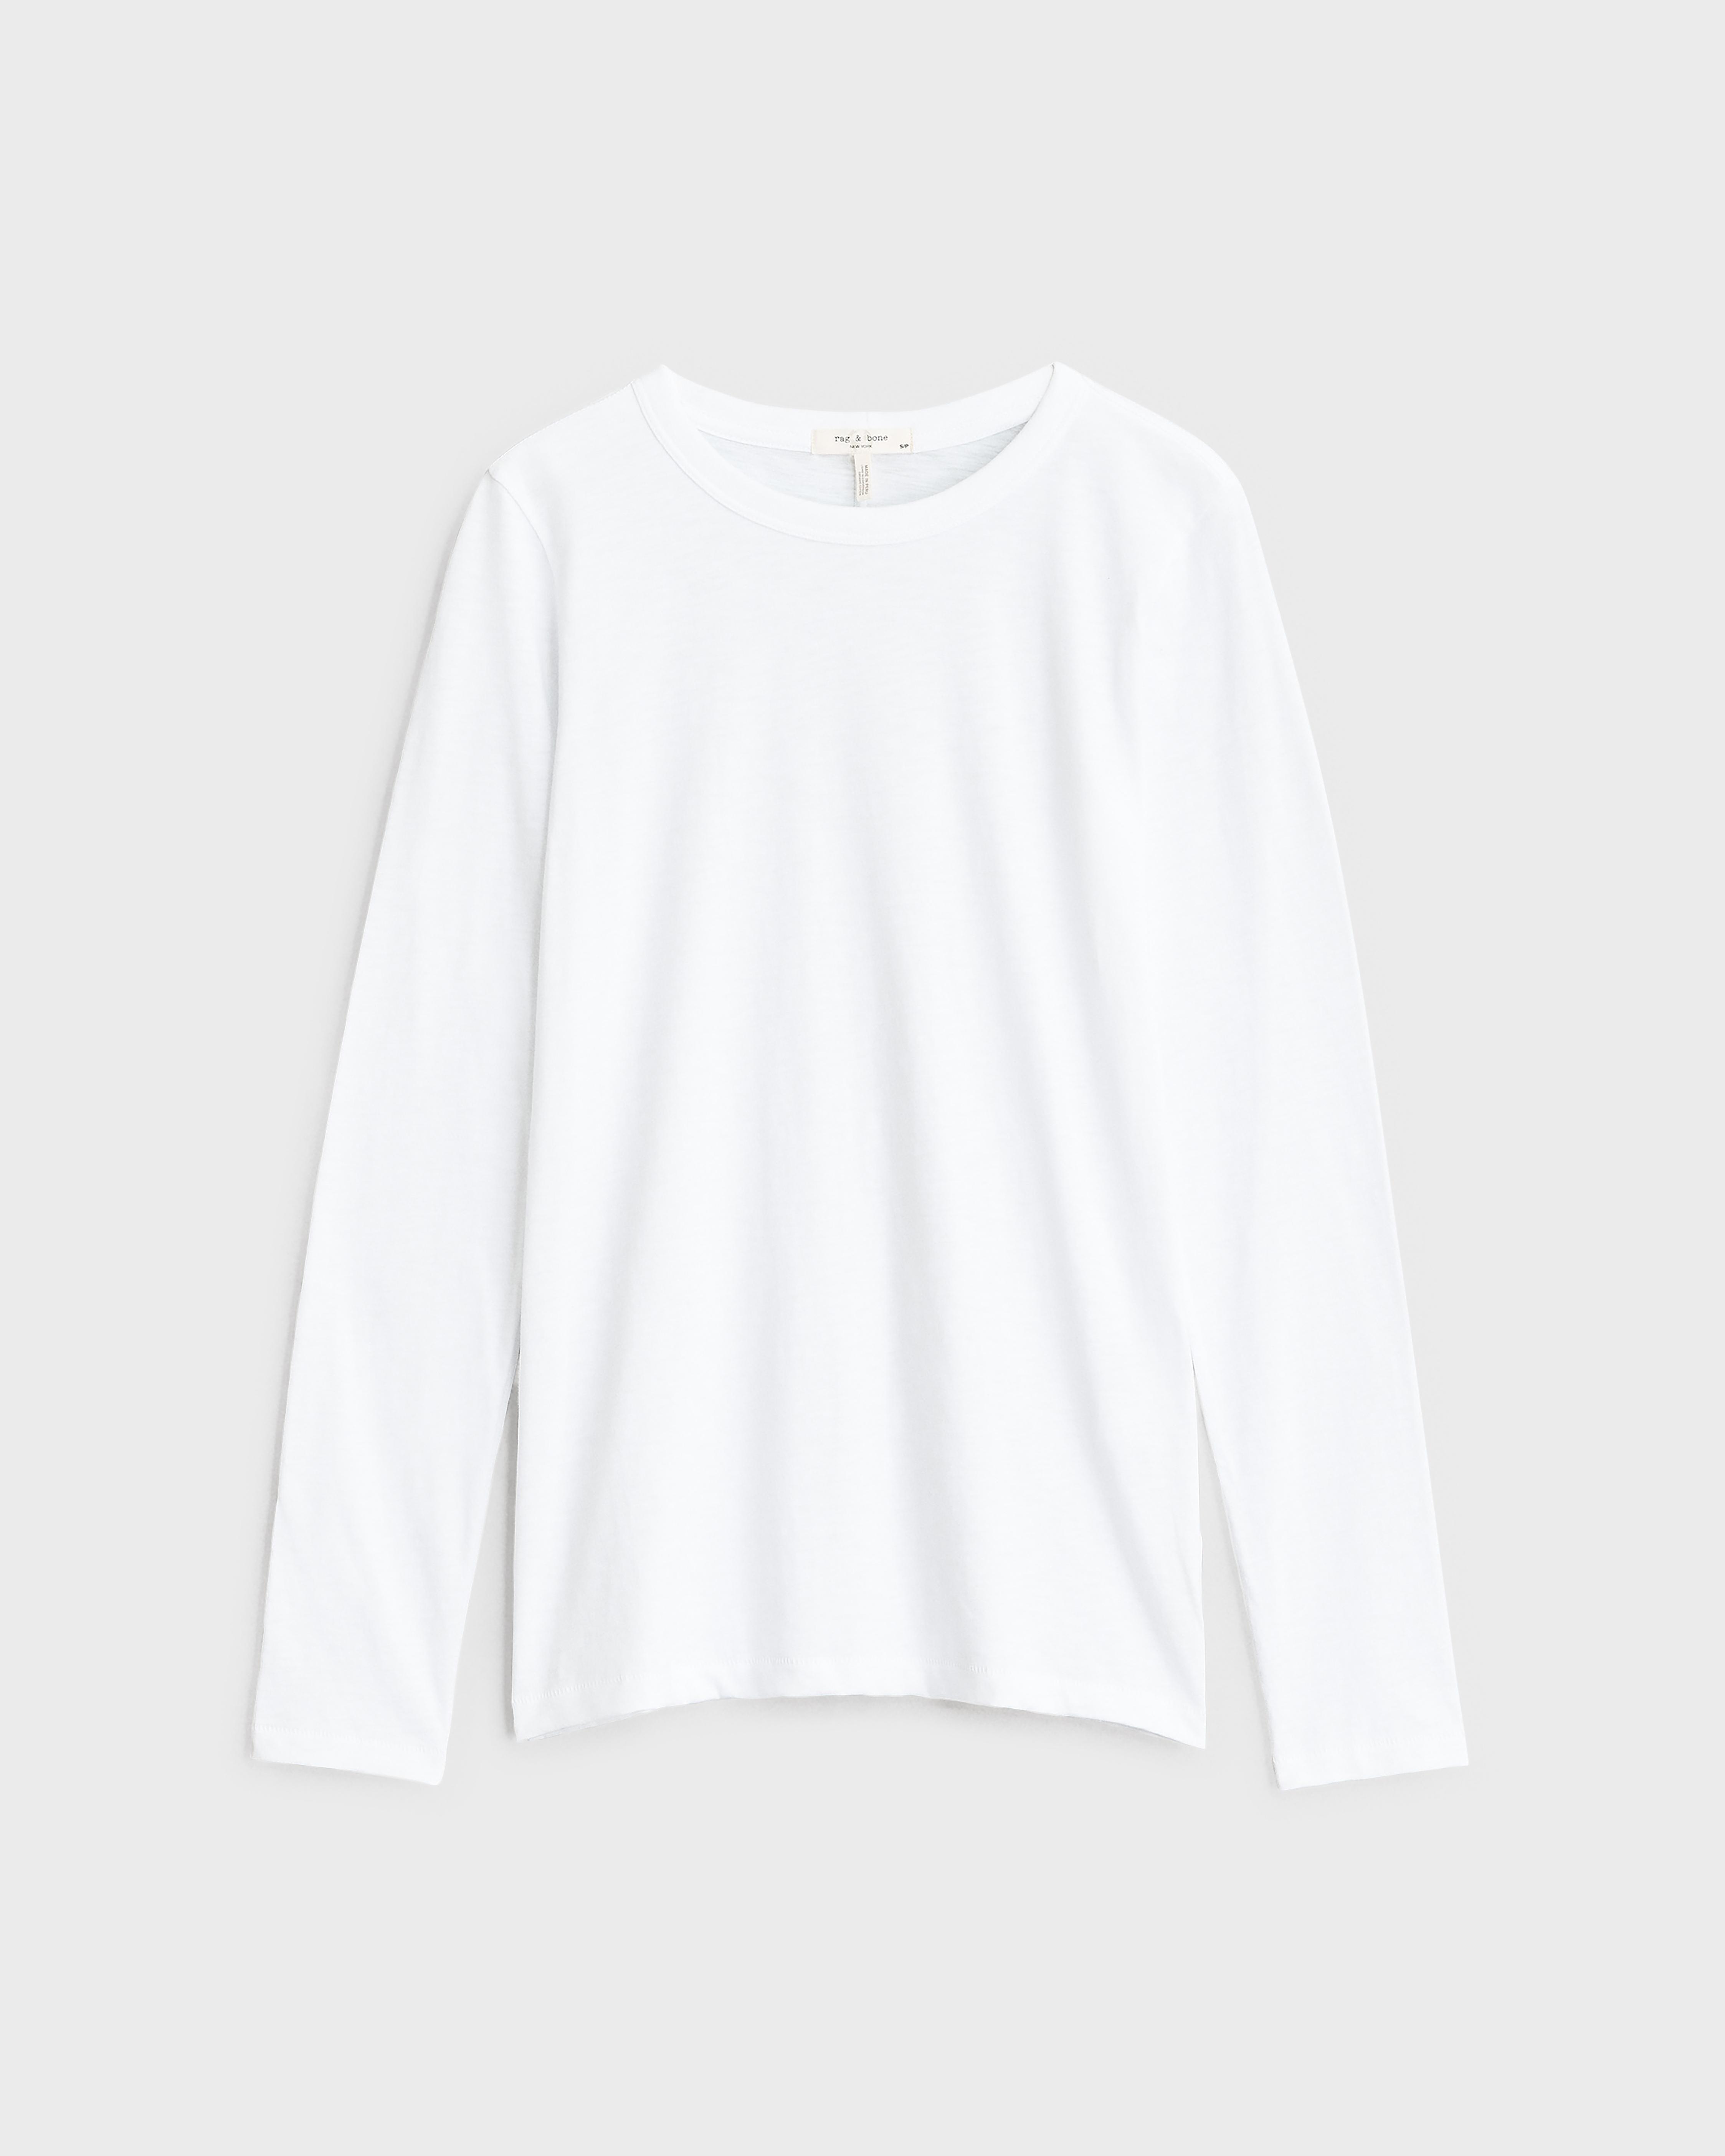 Essentials Women's Classic-Fit 100% Cotton Long-Sleeve Crewneck  T-Shirt